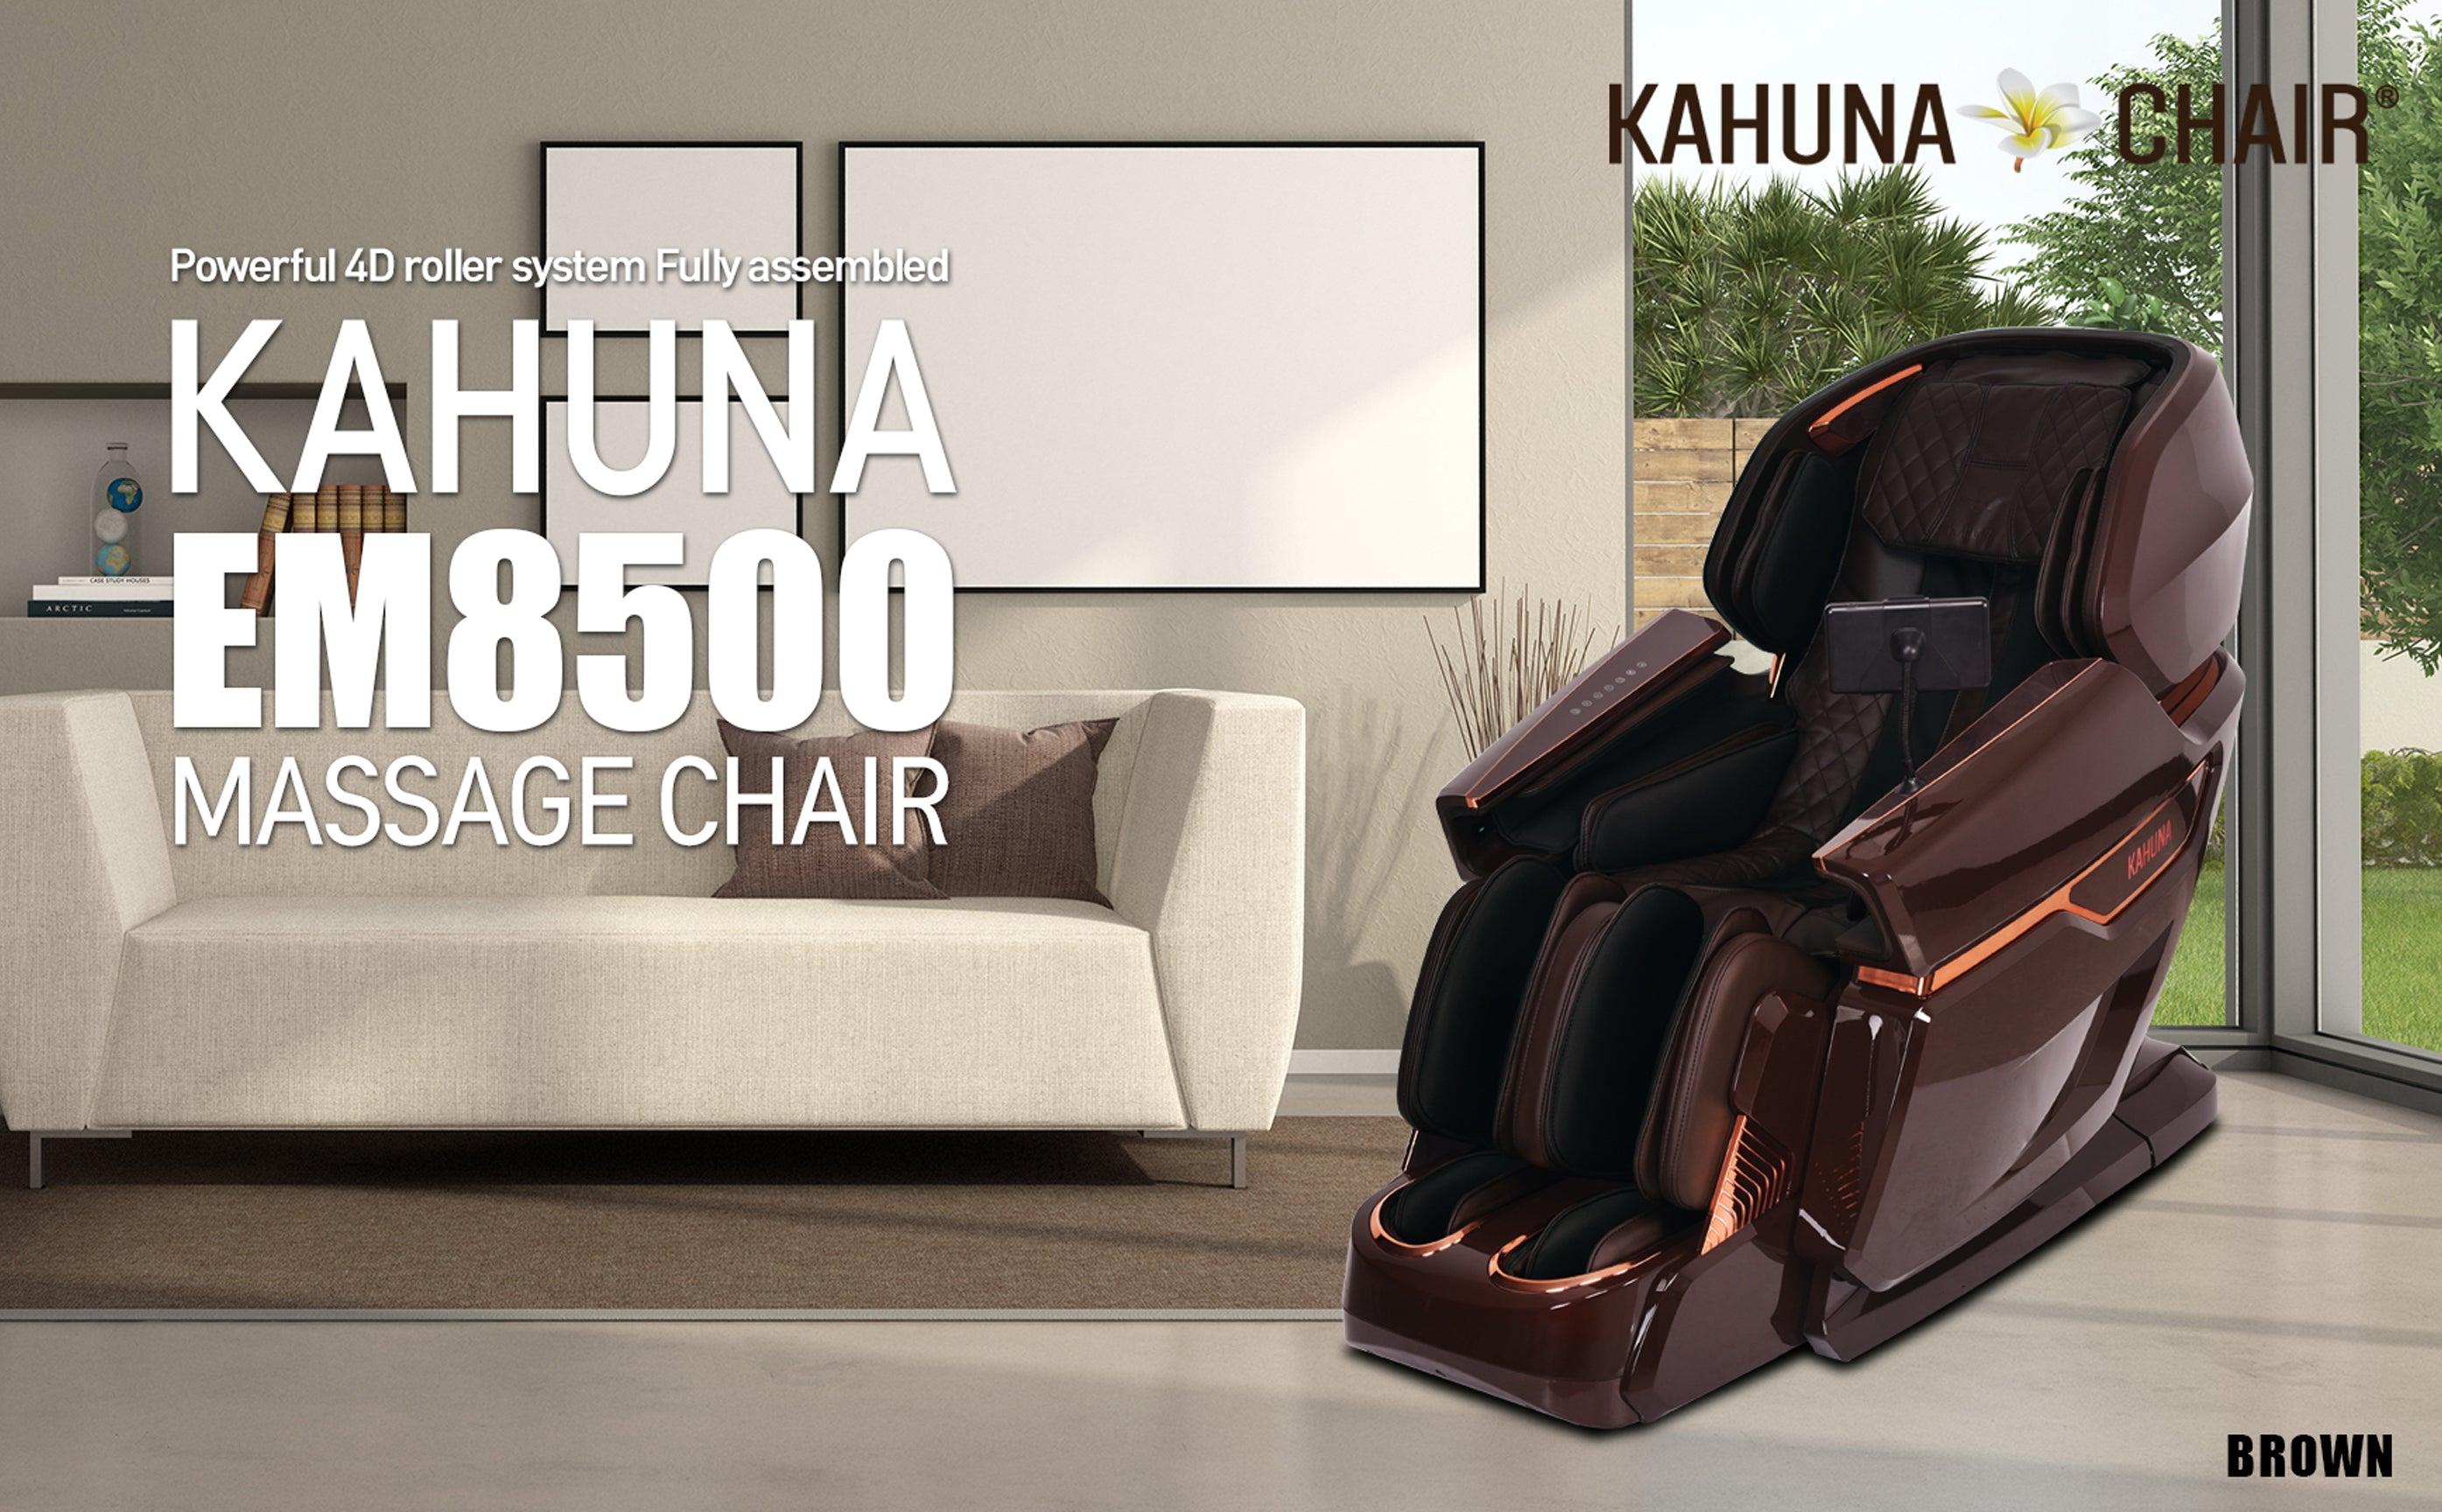 Why Kahuna Massage Chair?